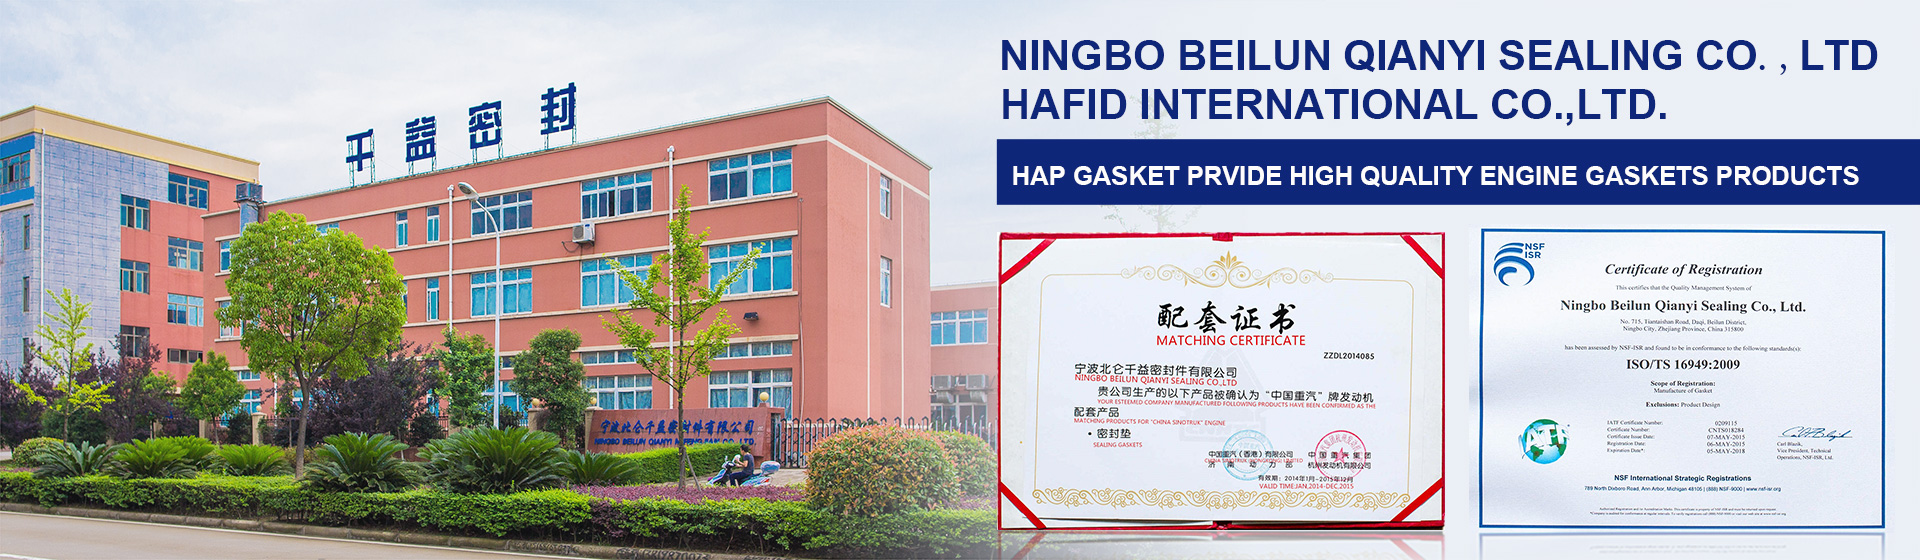 HAFID INTERNATIONAL LIMITED  |  NINGBO BEILUN QIANYI SEALING CO.,LTD.